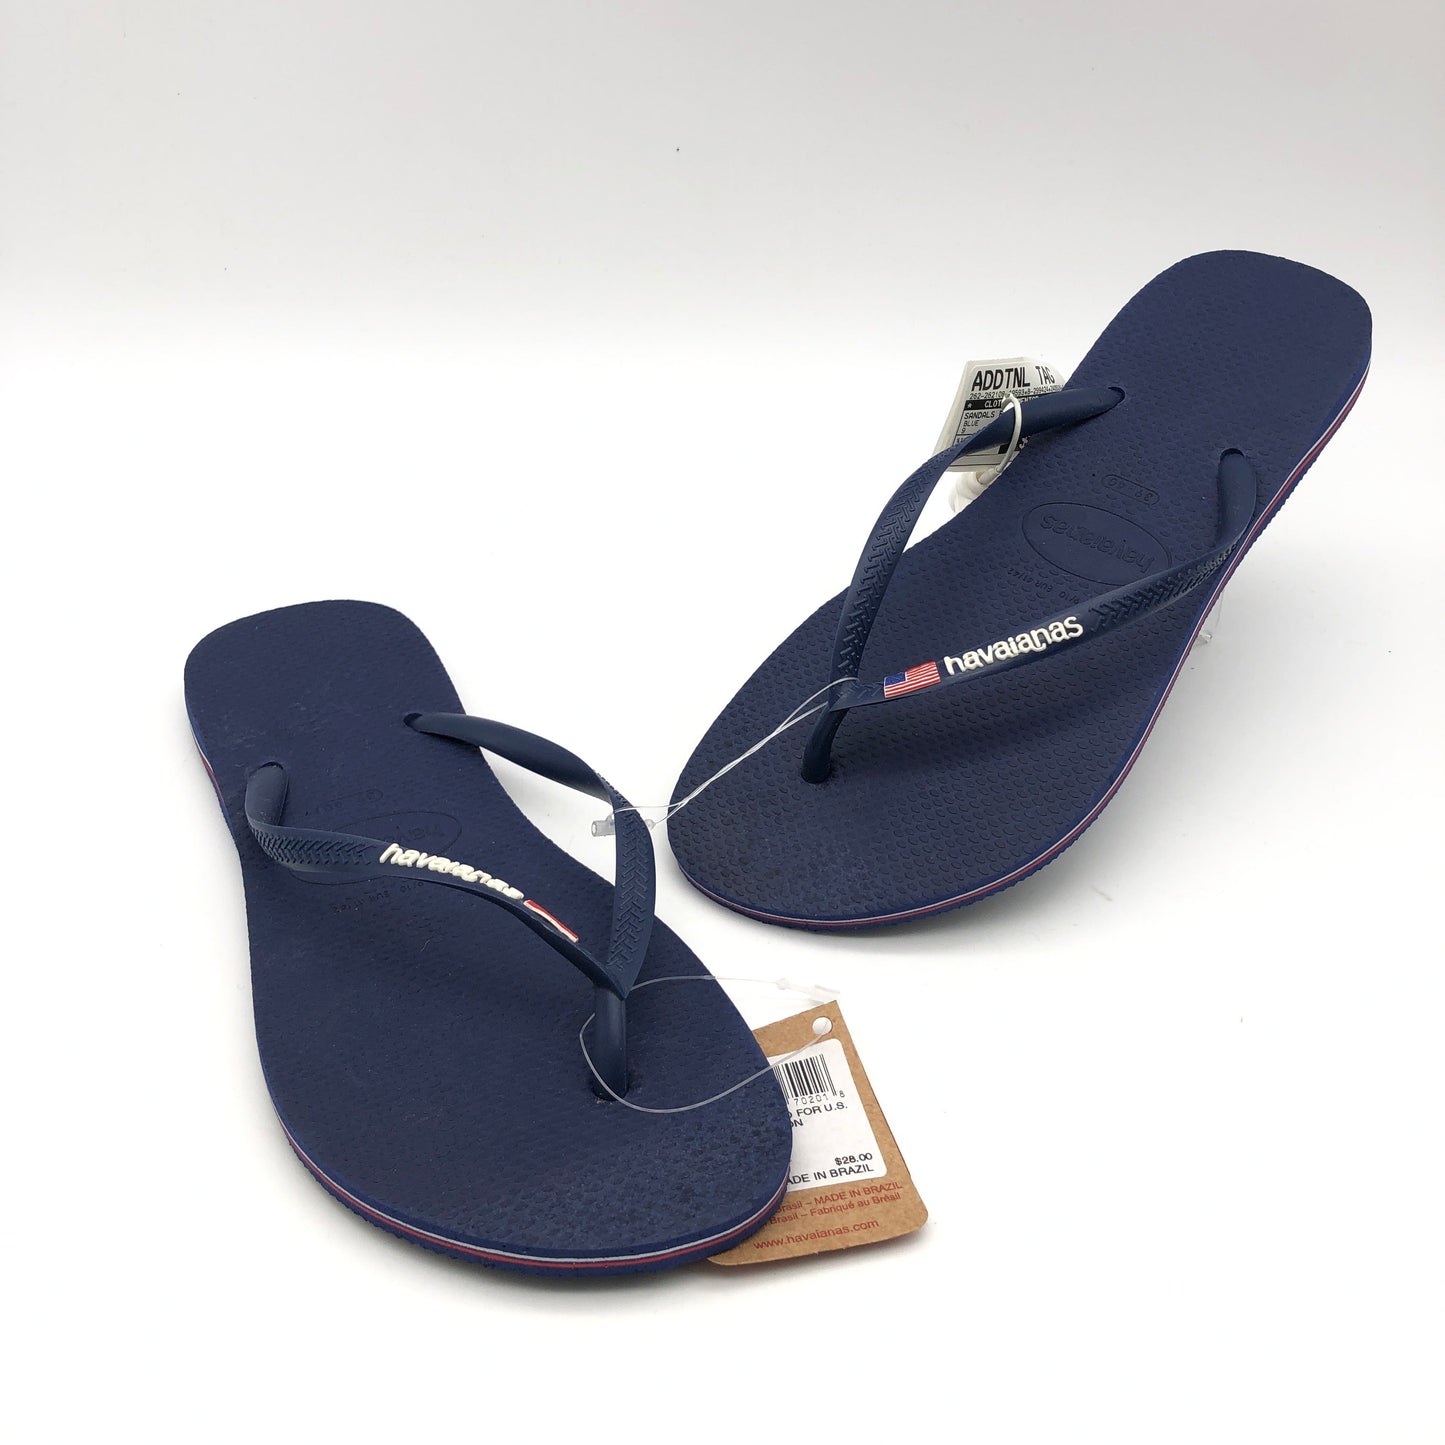 Sandals Flip Flops By Havaianas Size: 9